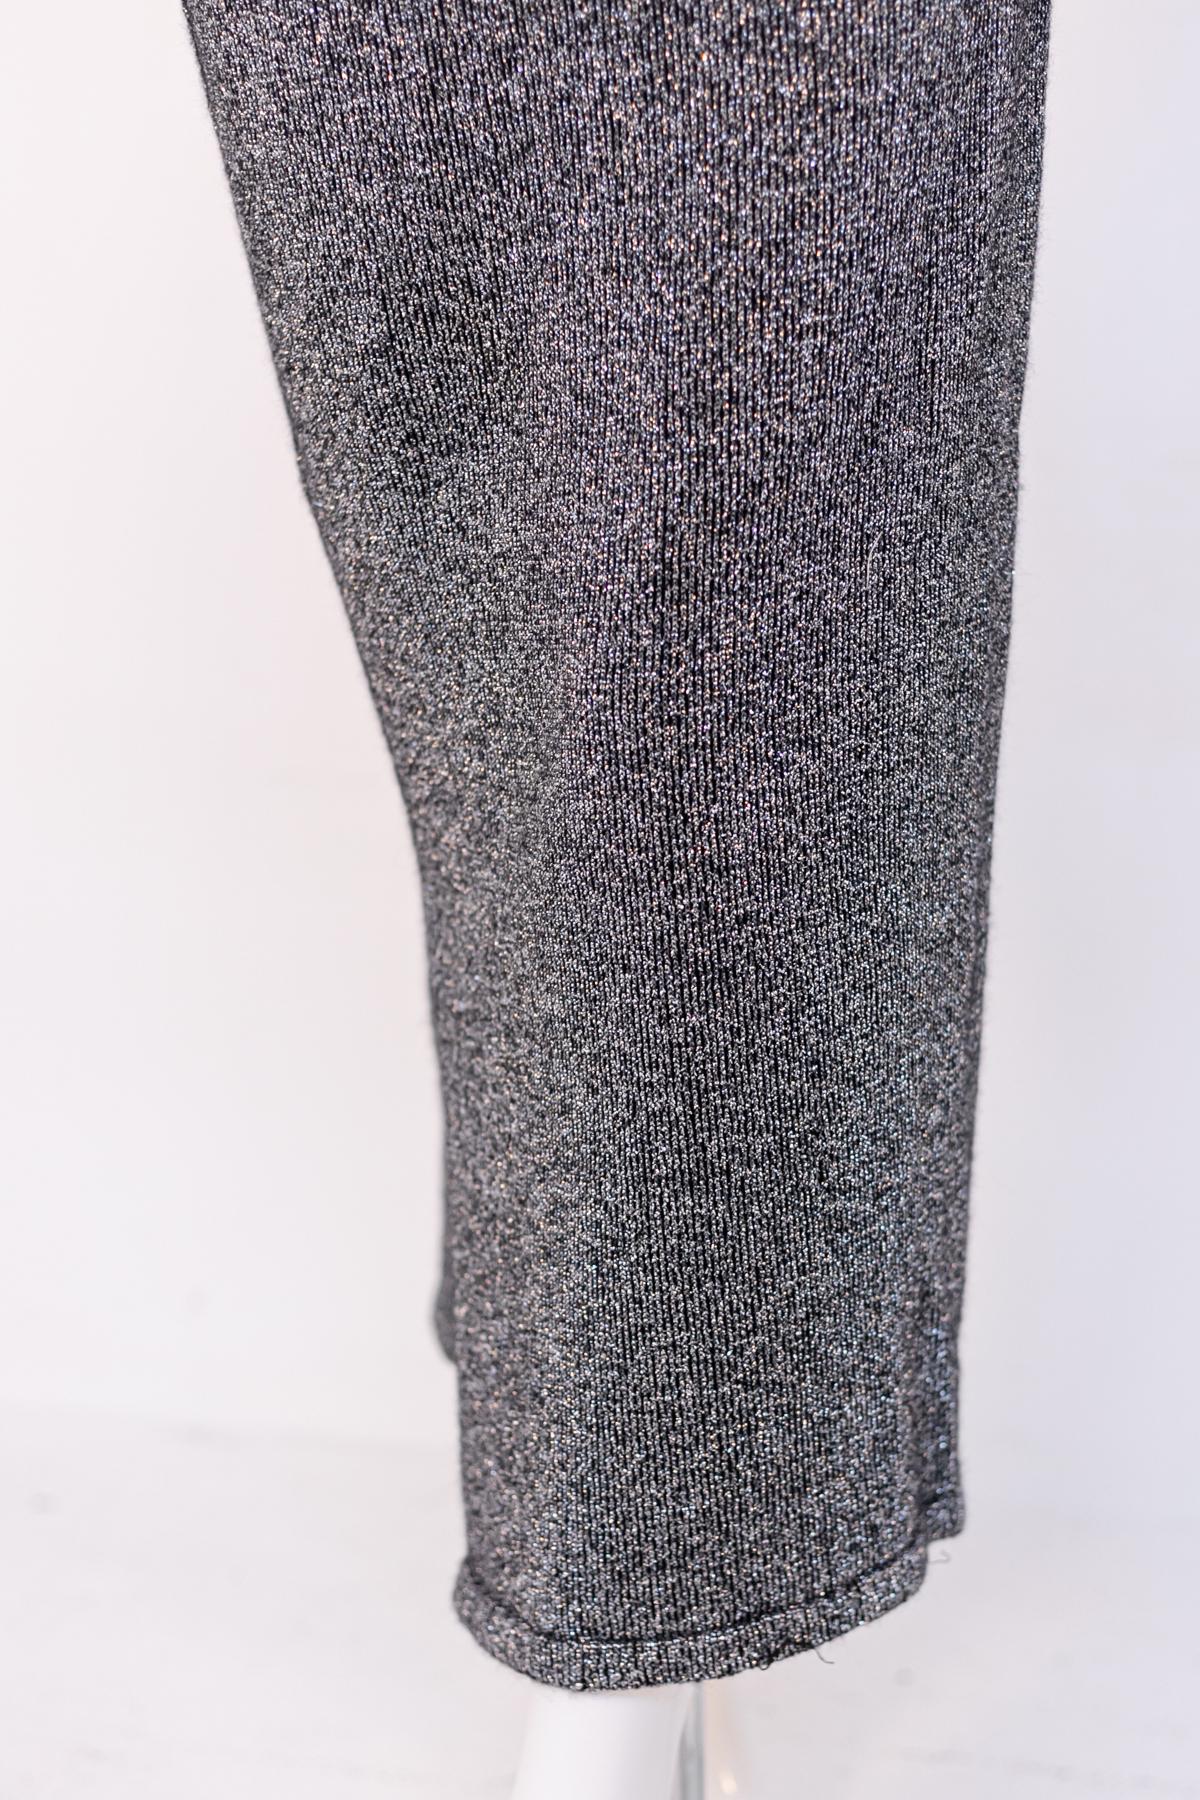 Krizia Casual Vintage Grey Long Skirt For Sale 5